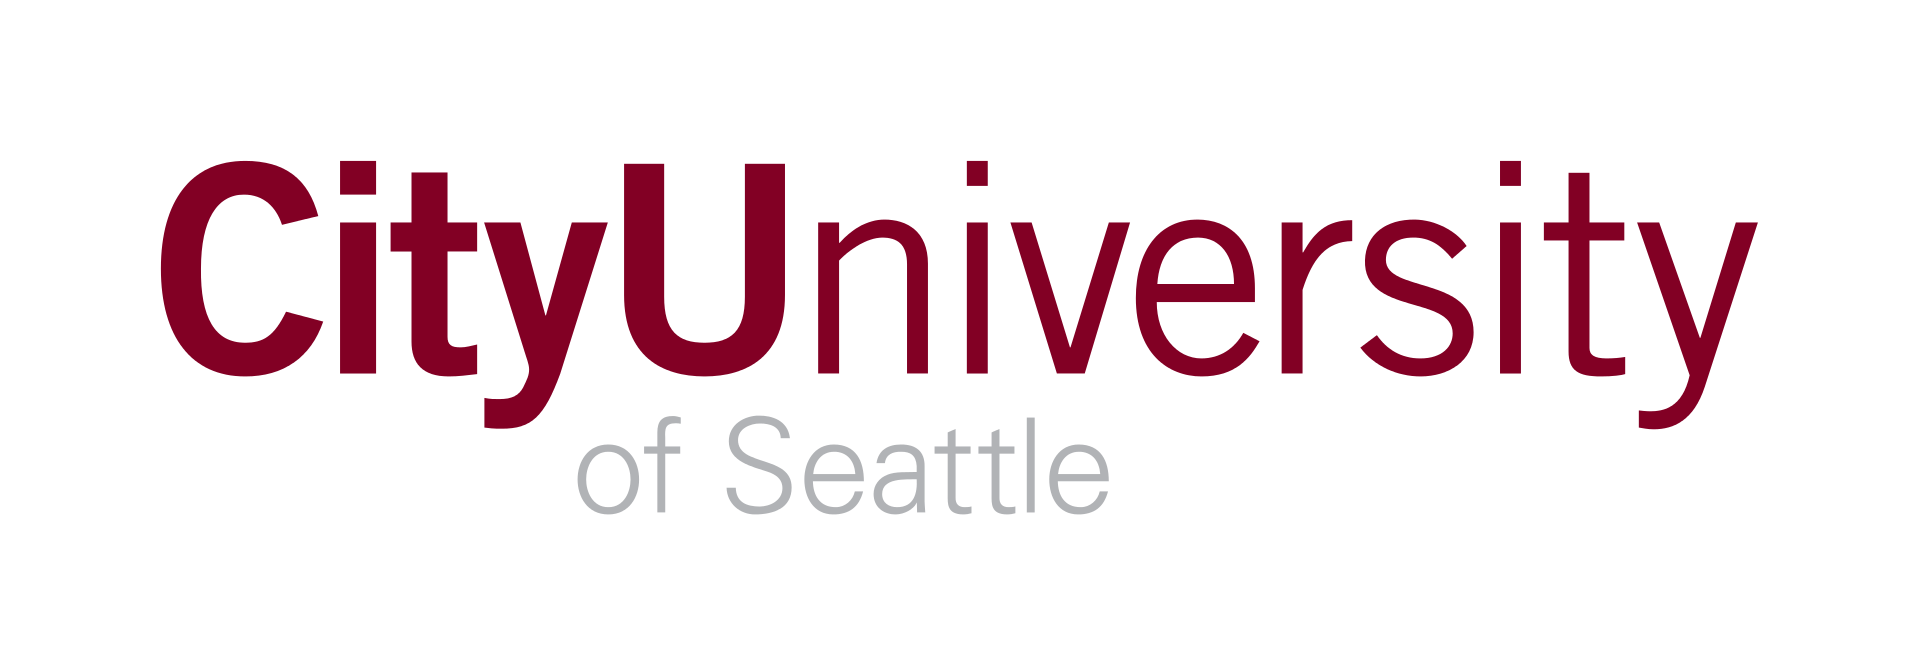 #City University of Seattle (CityU) 29 March 2019